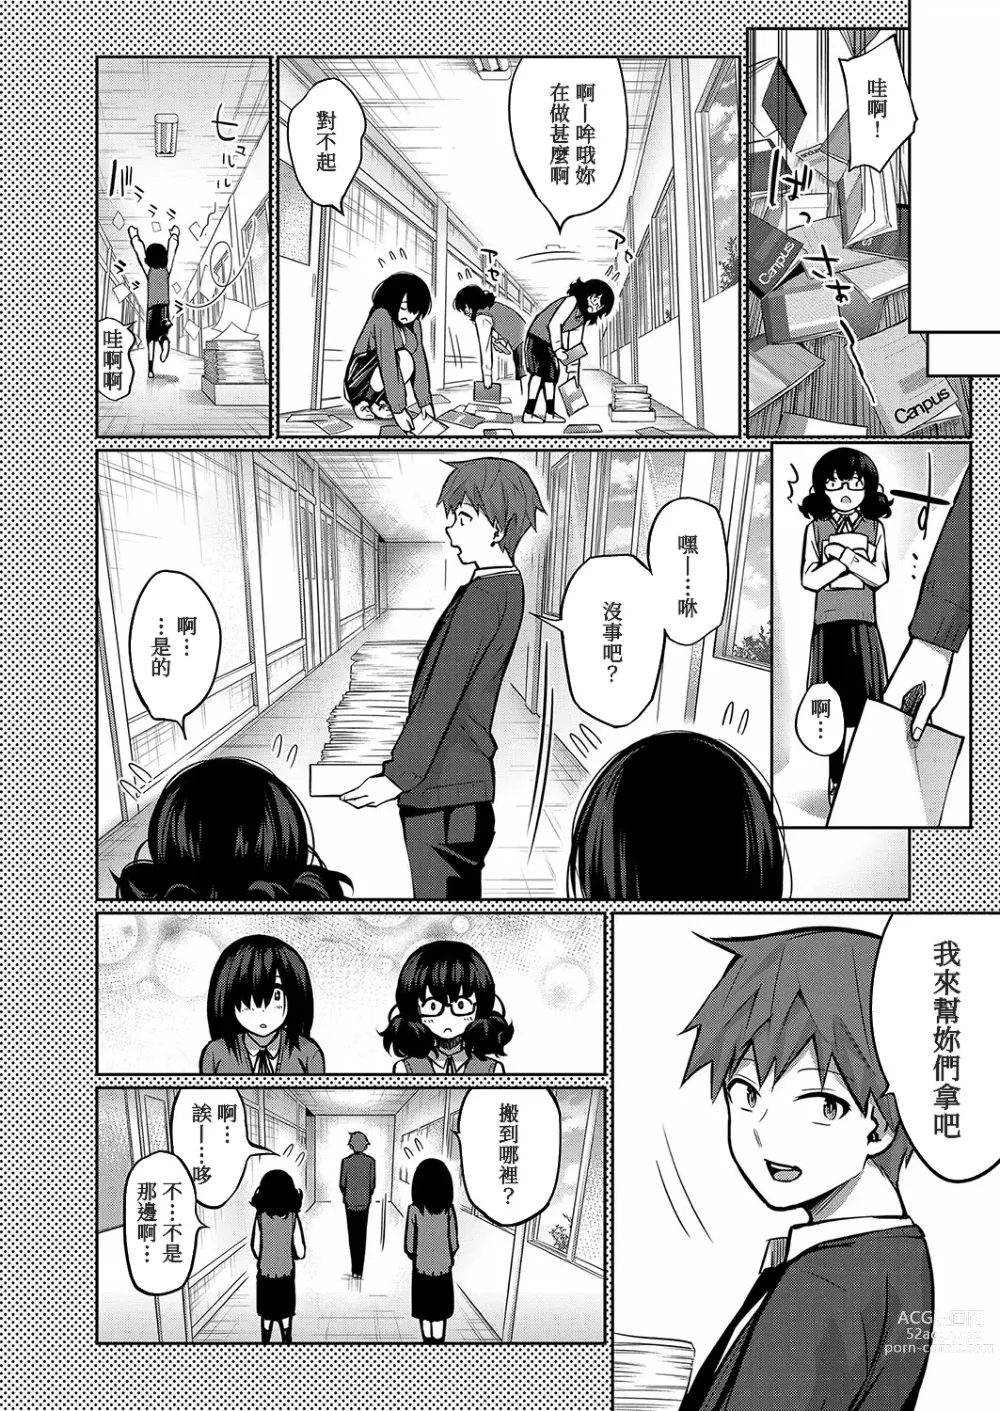 Page 38 of manga Tasukete! Jimiko ni Okasaremasu!